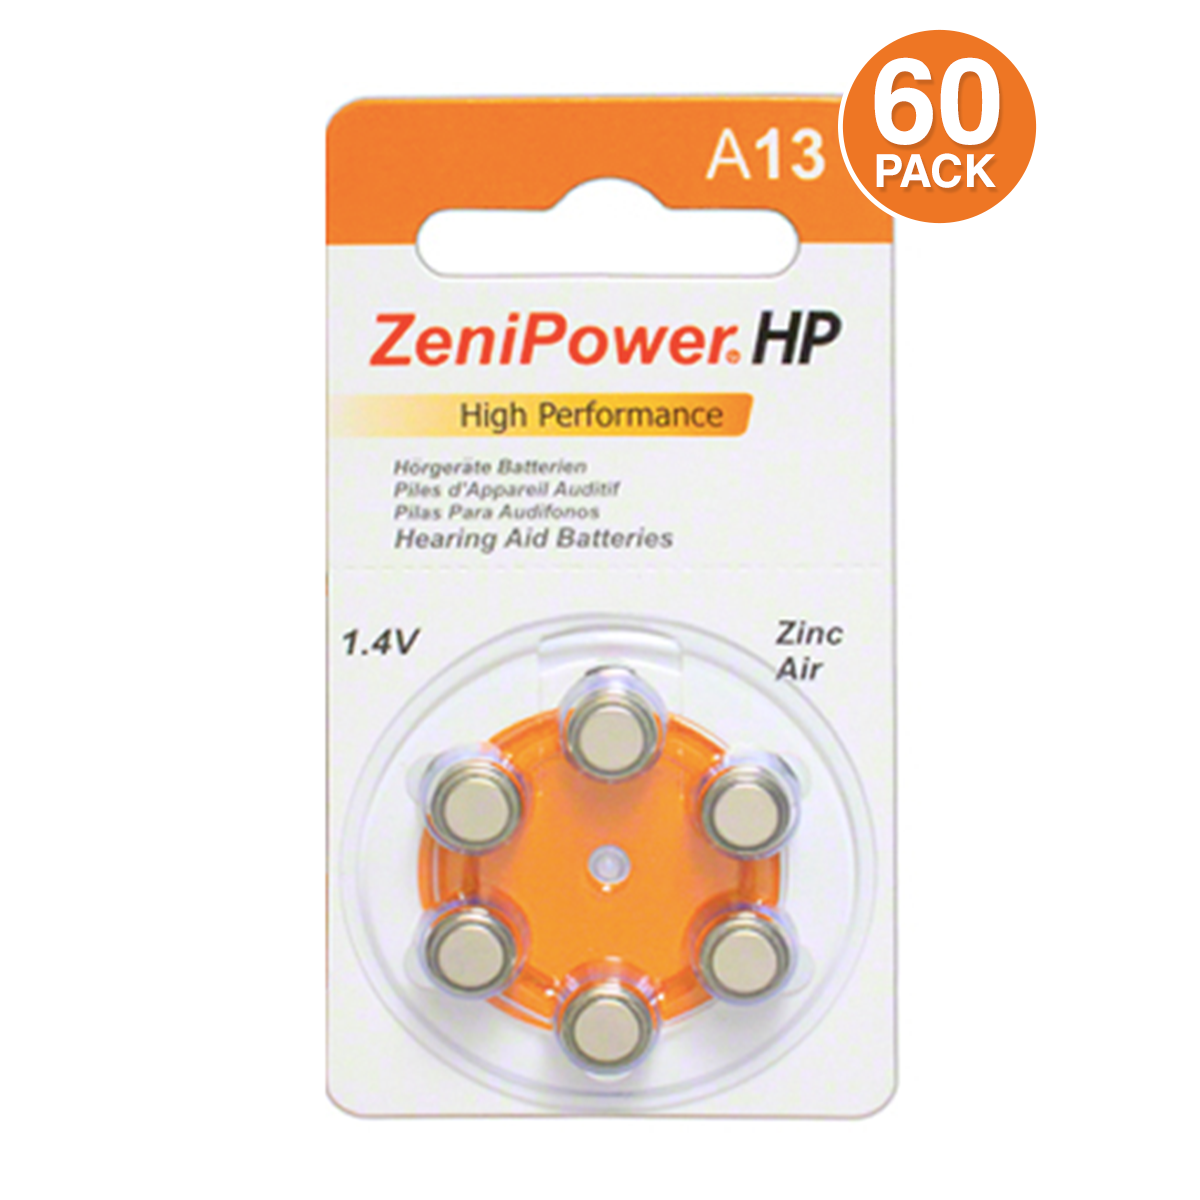 ZeniPower A13 Hearing Aid Battery 60 pcs - MERCURY FREE